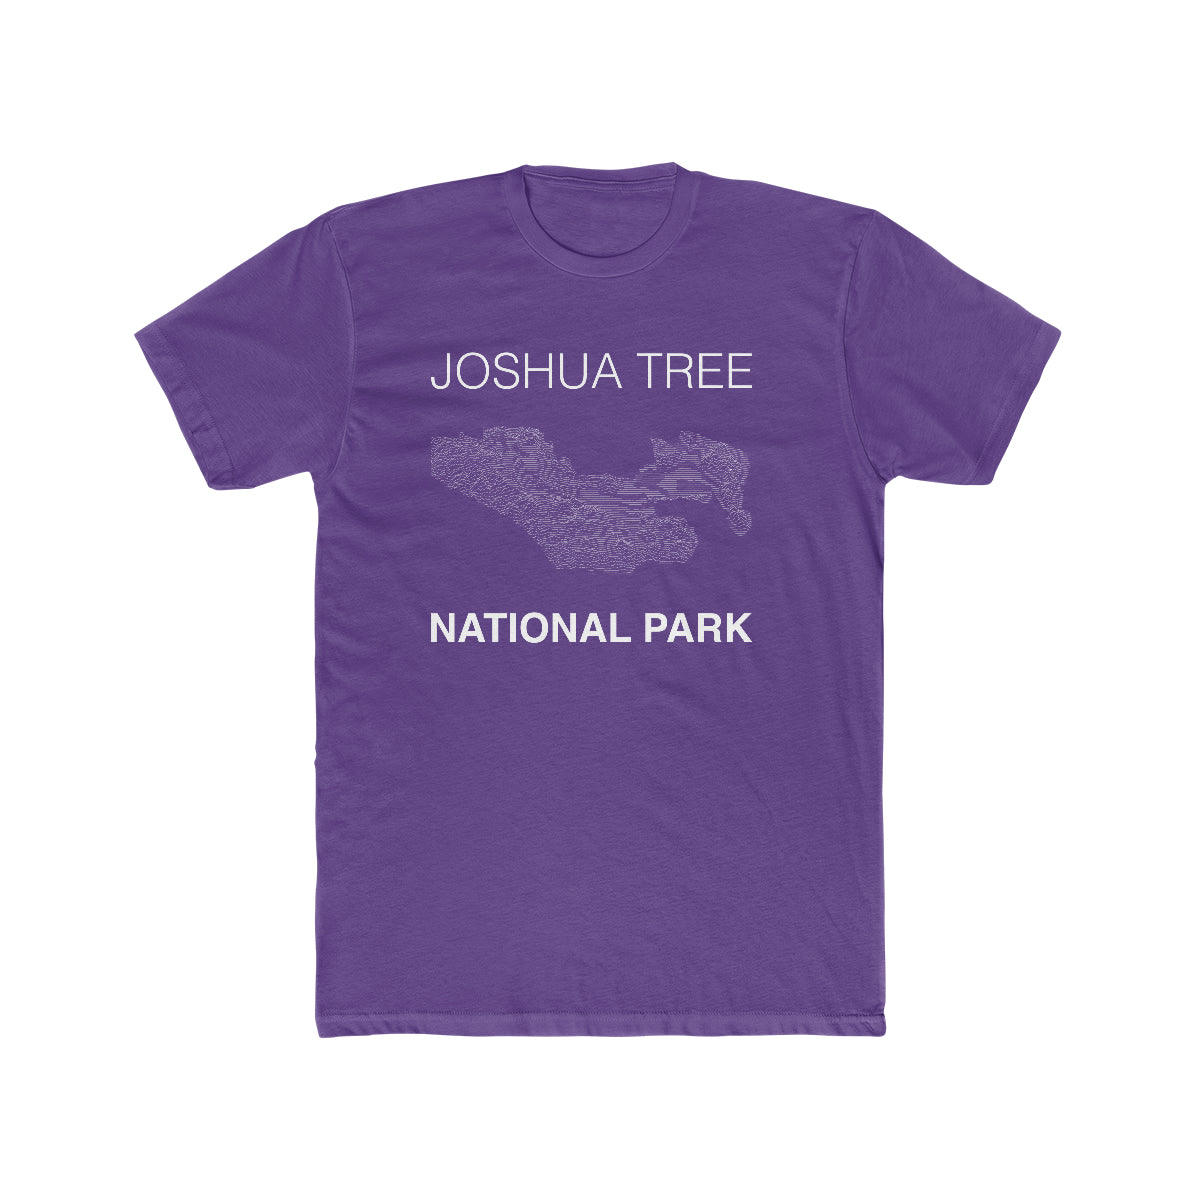 Joshua Tree National Park T-Shirt Lines